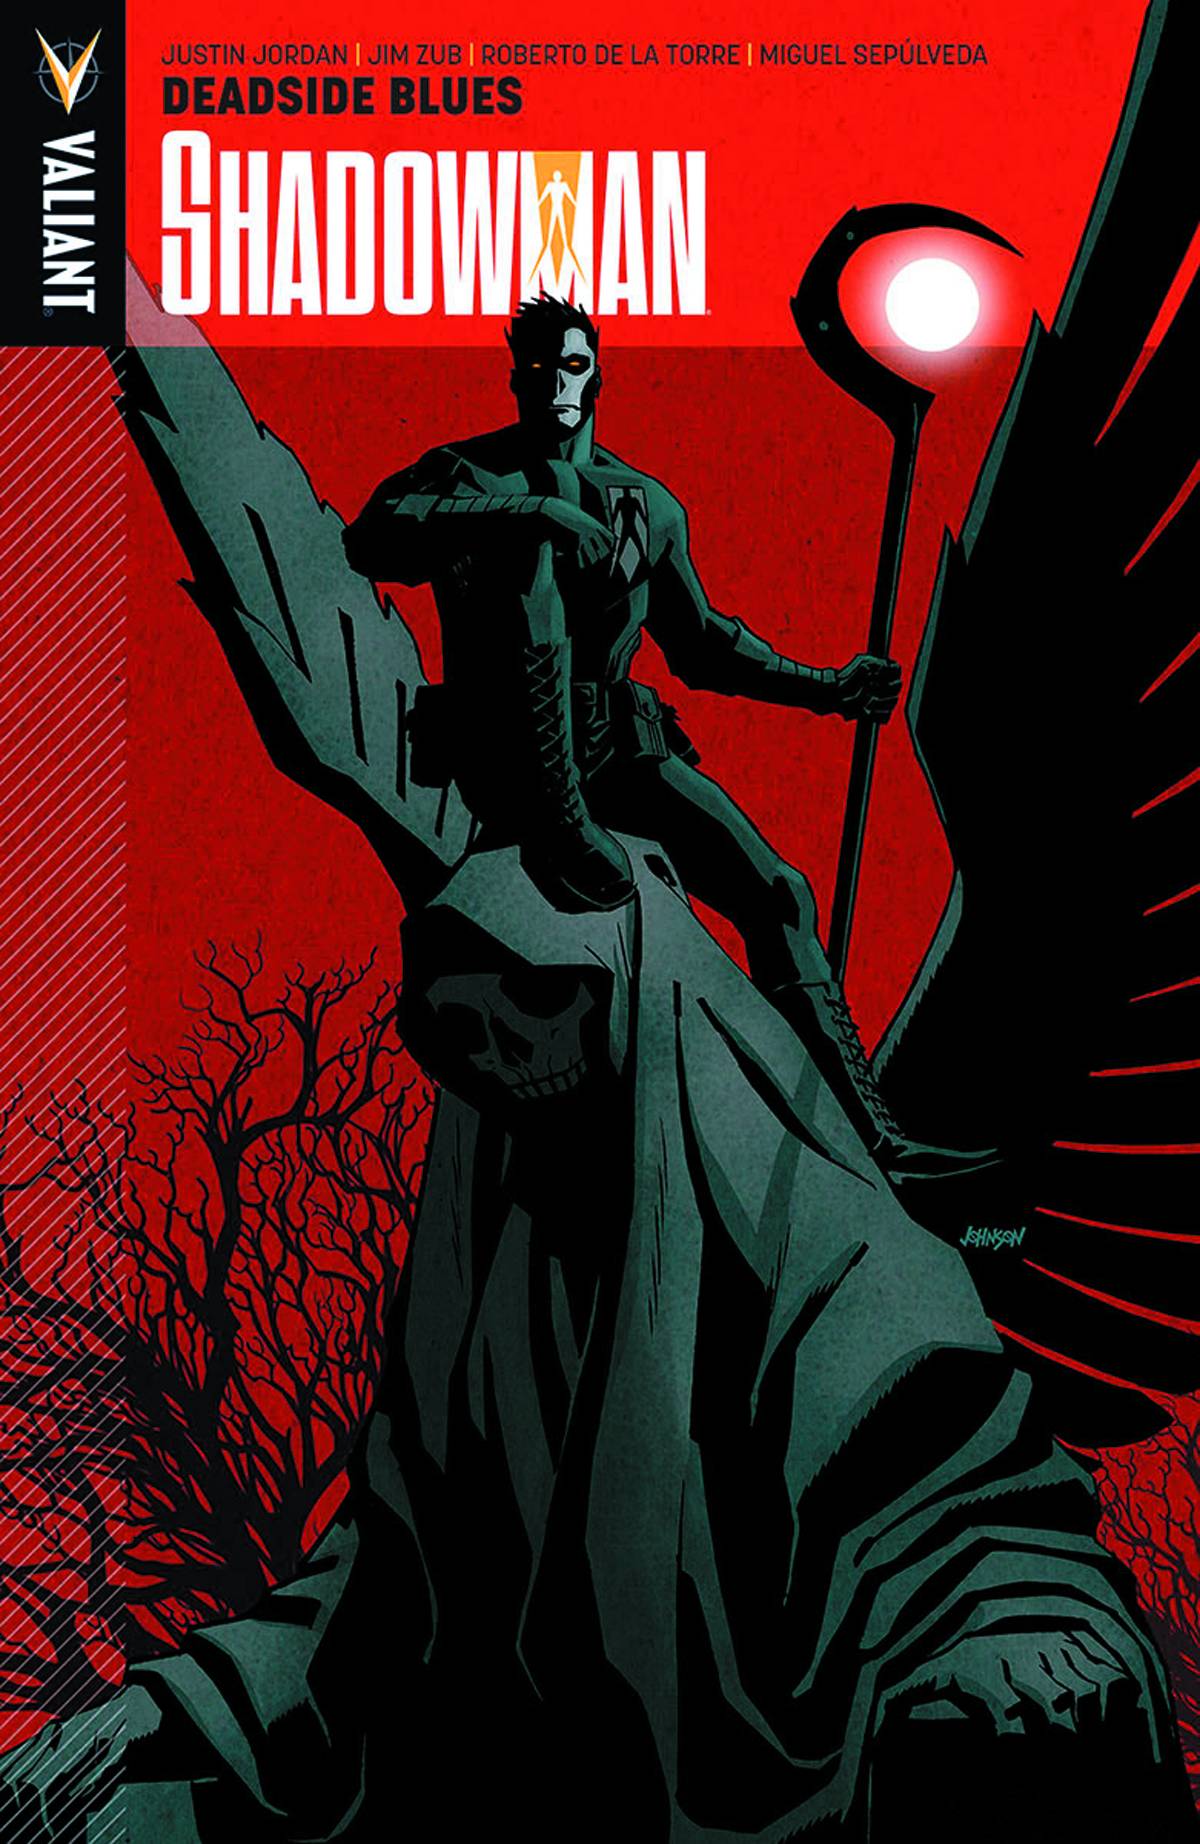 Shadowman Graphic Novel Volume 3 Deadside Blues